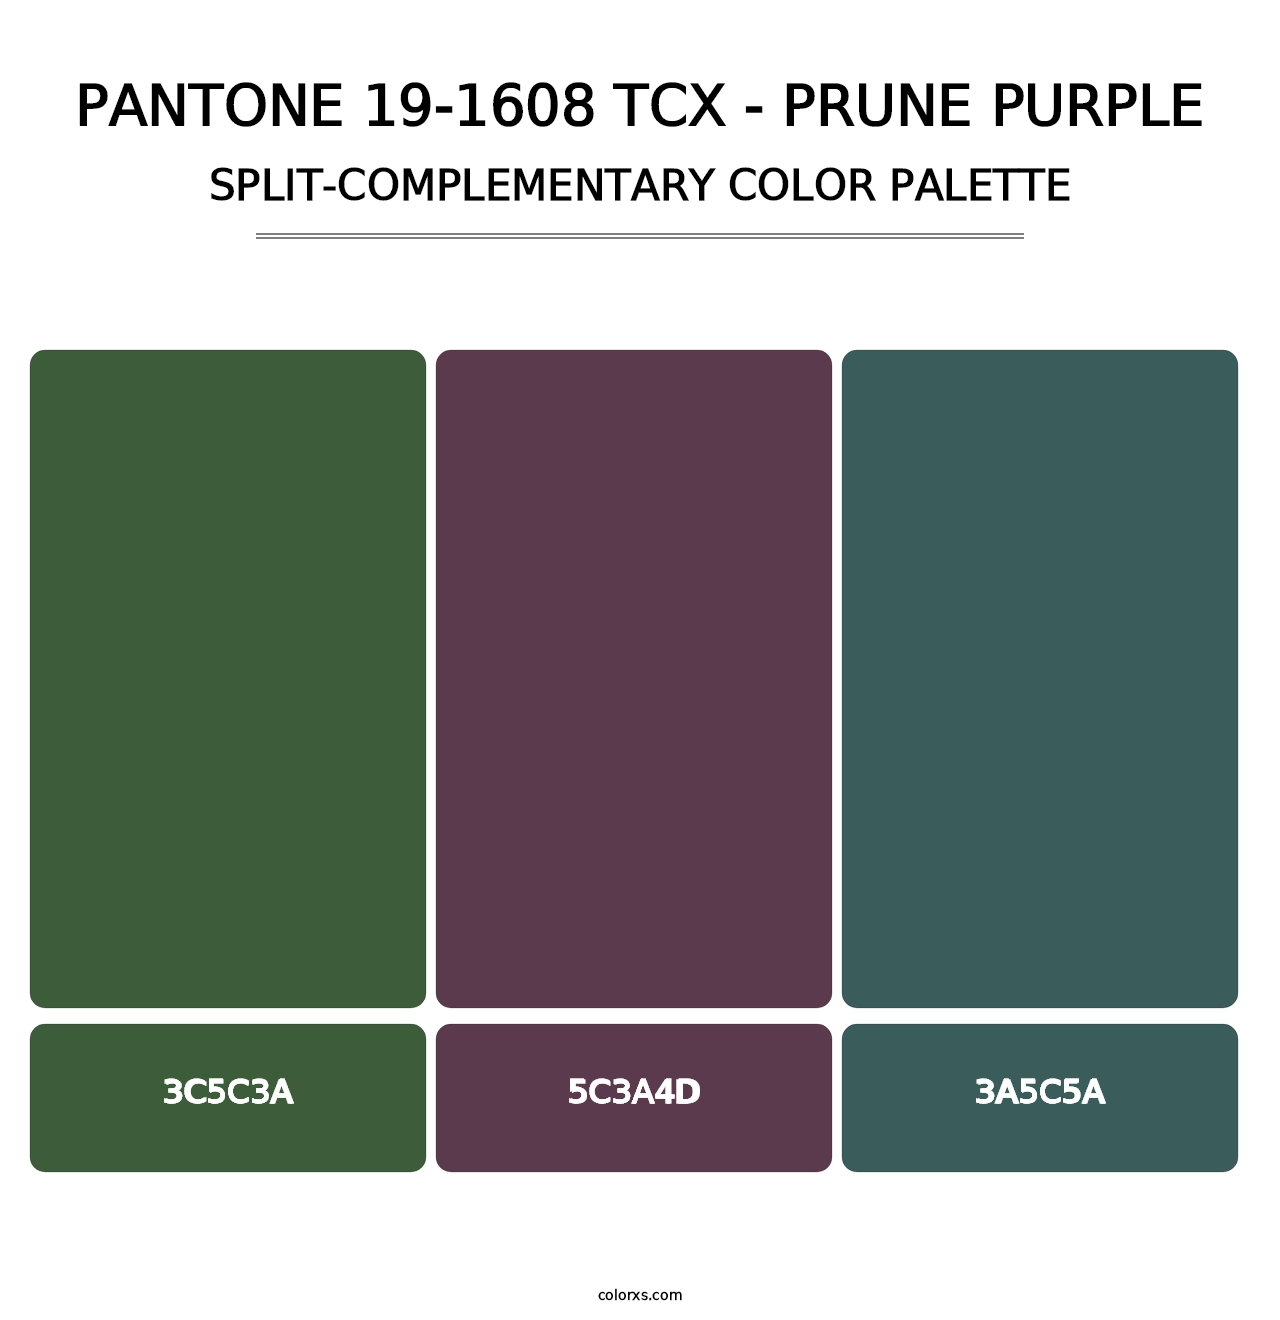 PANTONE 19-1608 TCX - Prune Purple - Split-Complementary Color Palette